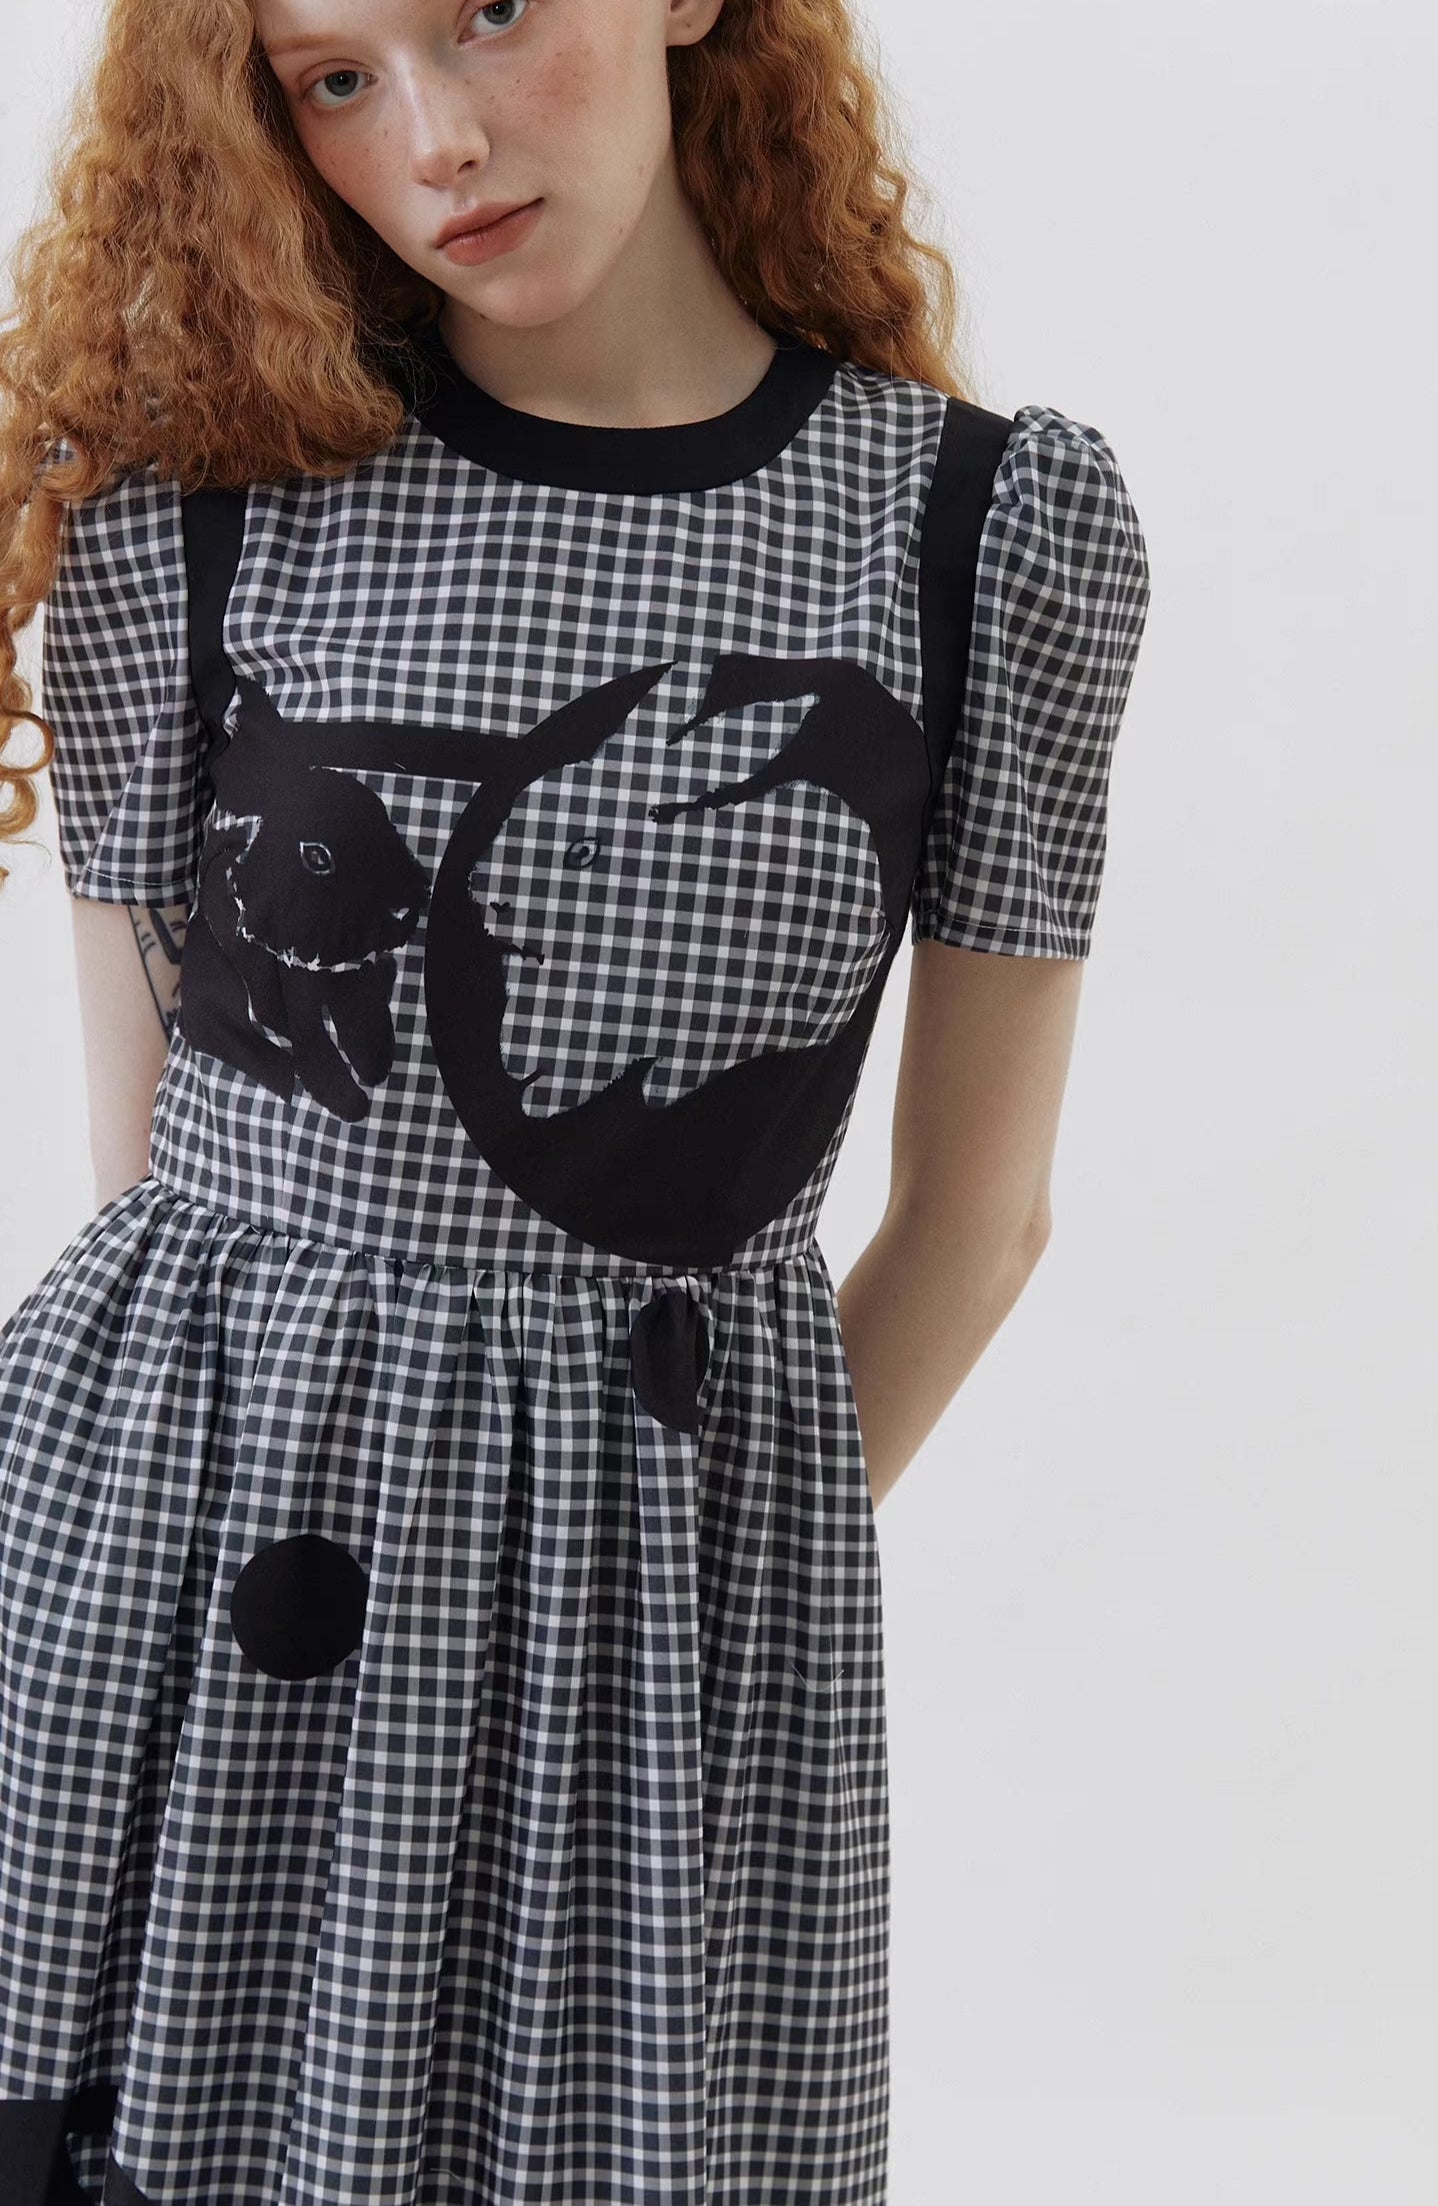 rabbit polka dot silhouette printed dress